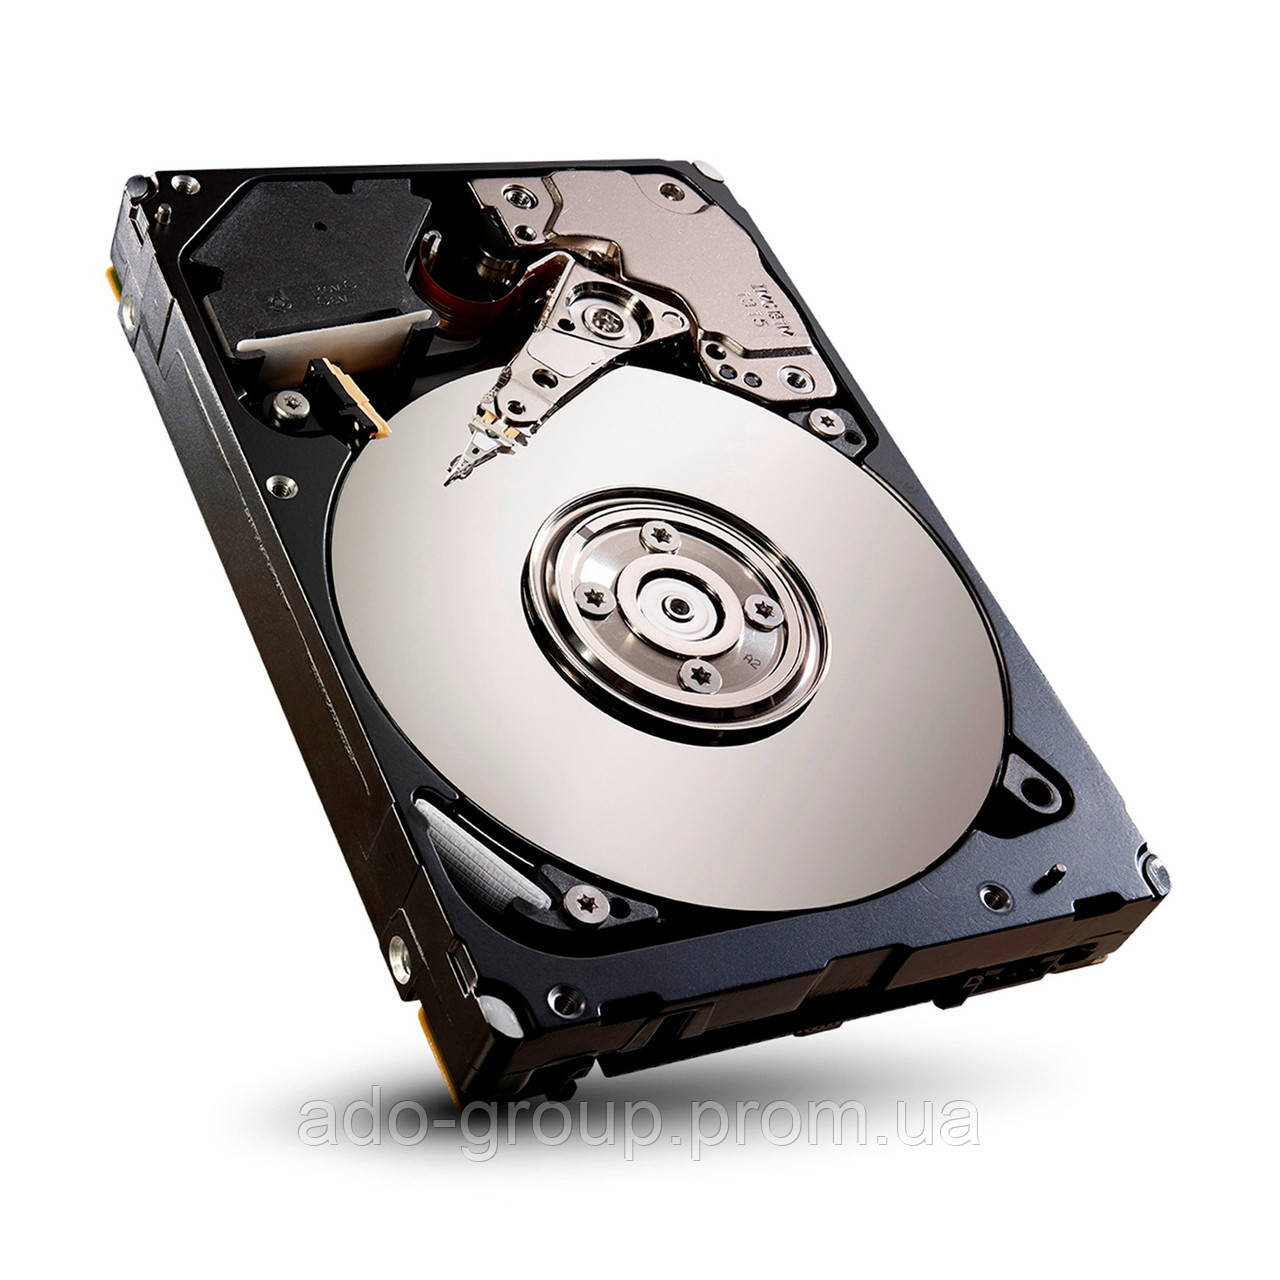 454141-003 Жесткий диск HP 750GB SATA 7.2K 3.5" +